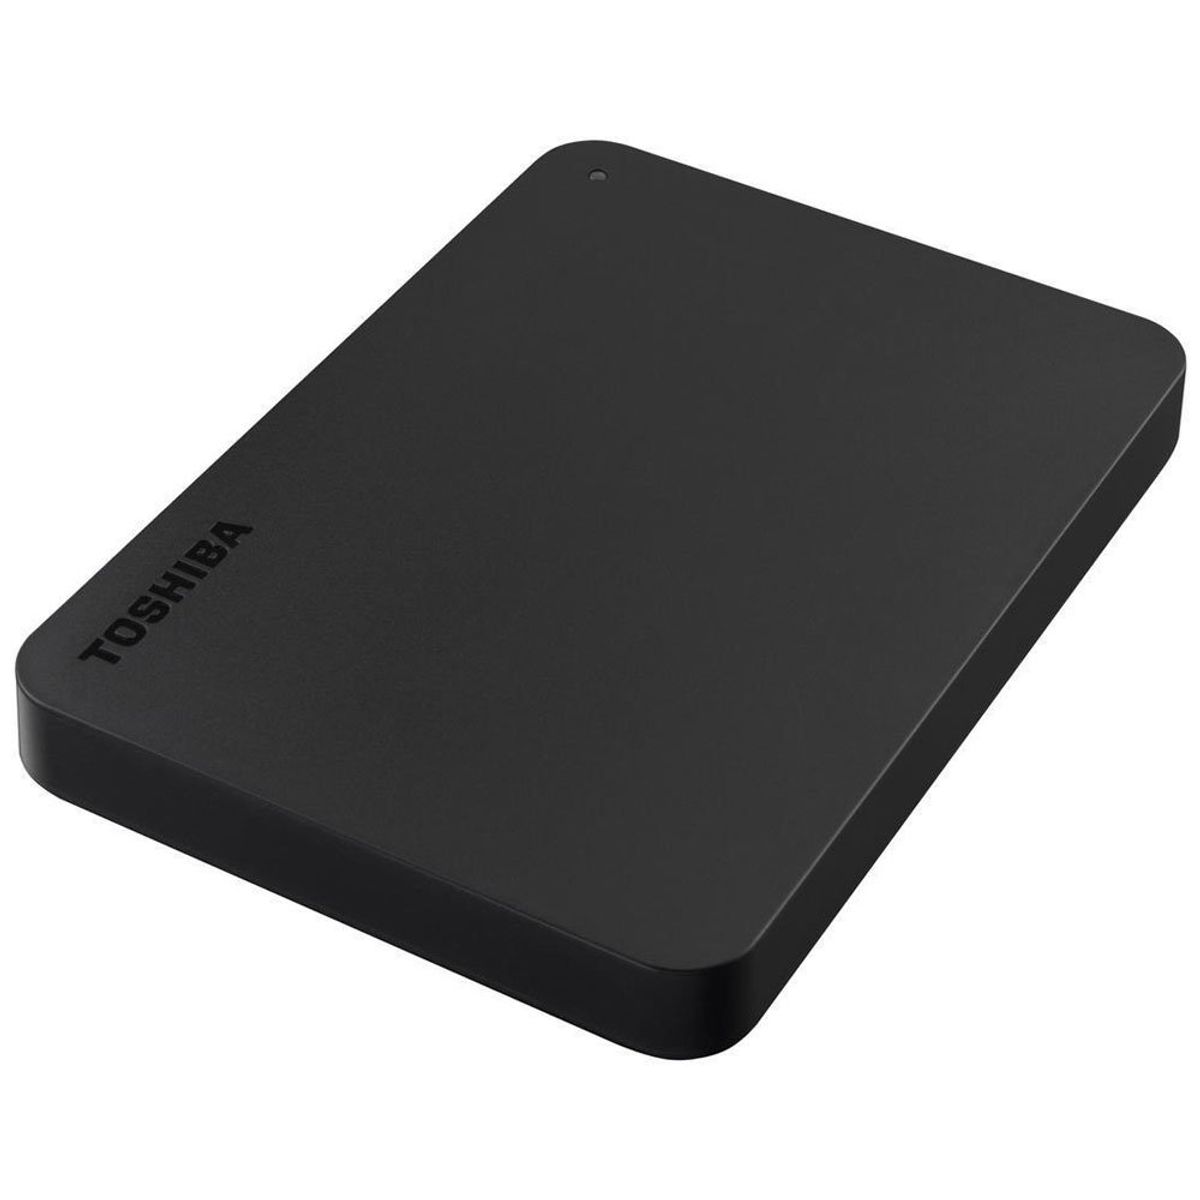 HD Externo Portátil Toshiba 1TB Canvio Basics USB 3.0 Preto 